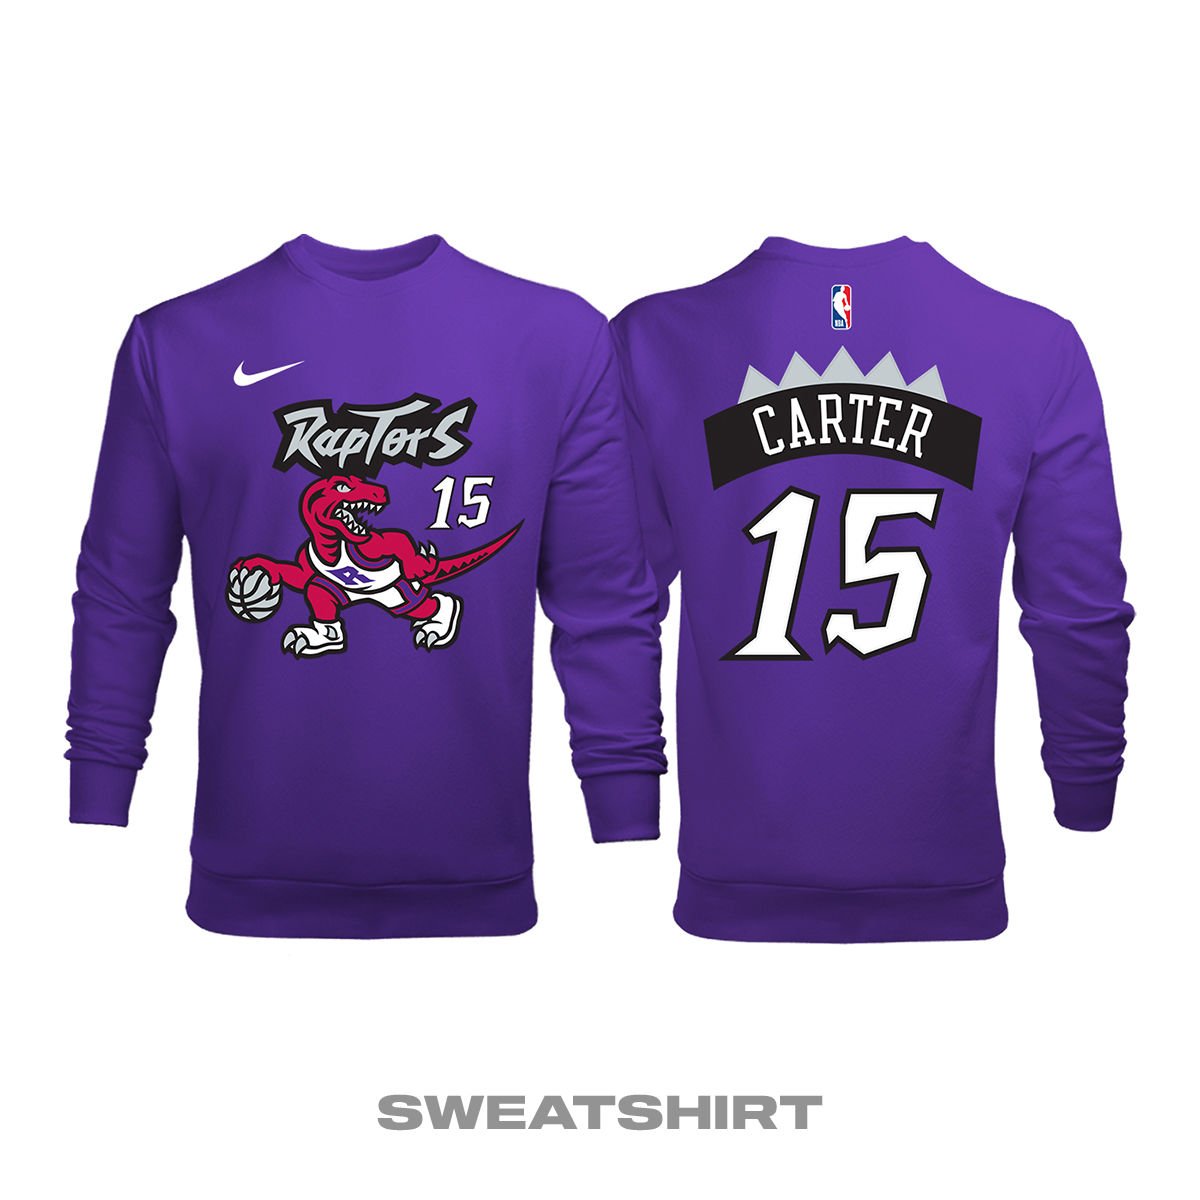 Toronto Raptors: Hardwood Classics Edition 2014/2015 Sweatshirt